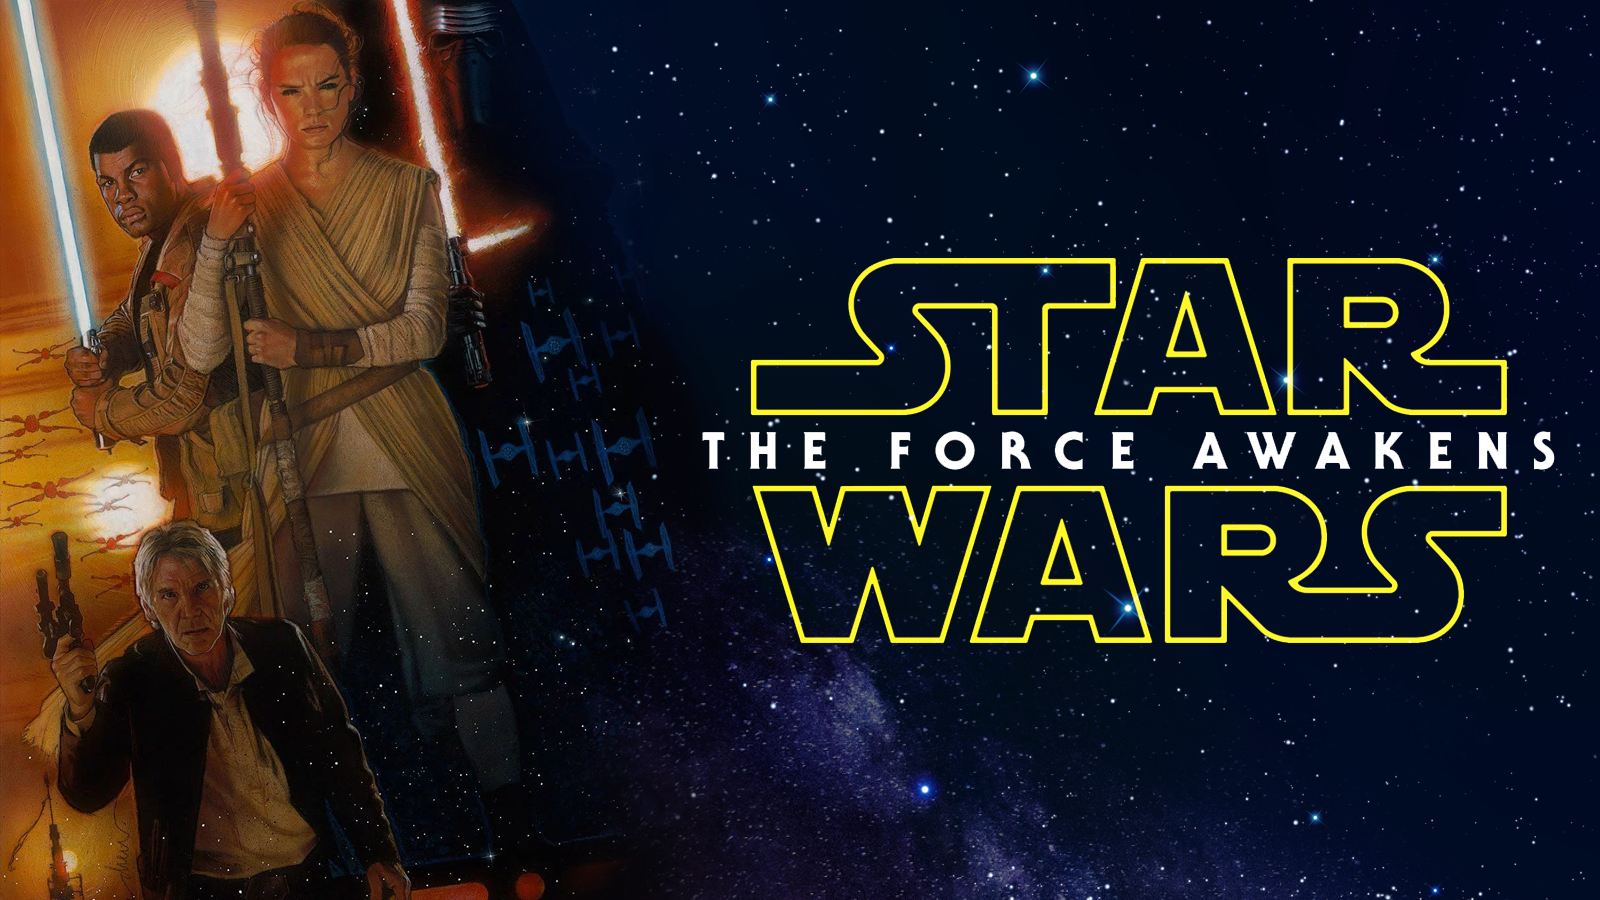 General 1600x900 Star Wars Star Wars: The Force Awakens Daisy Ridley fan art Star Wars Heroes movies Han Solo Rey (Star Wars) science fiction lightsaber